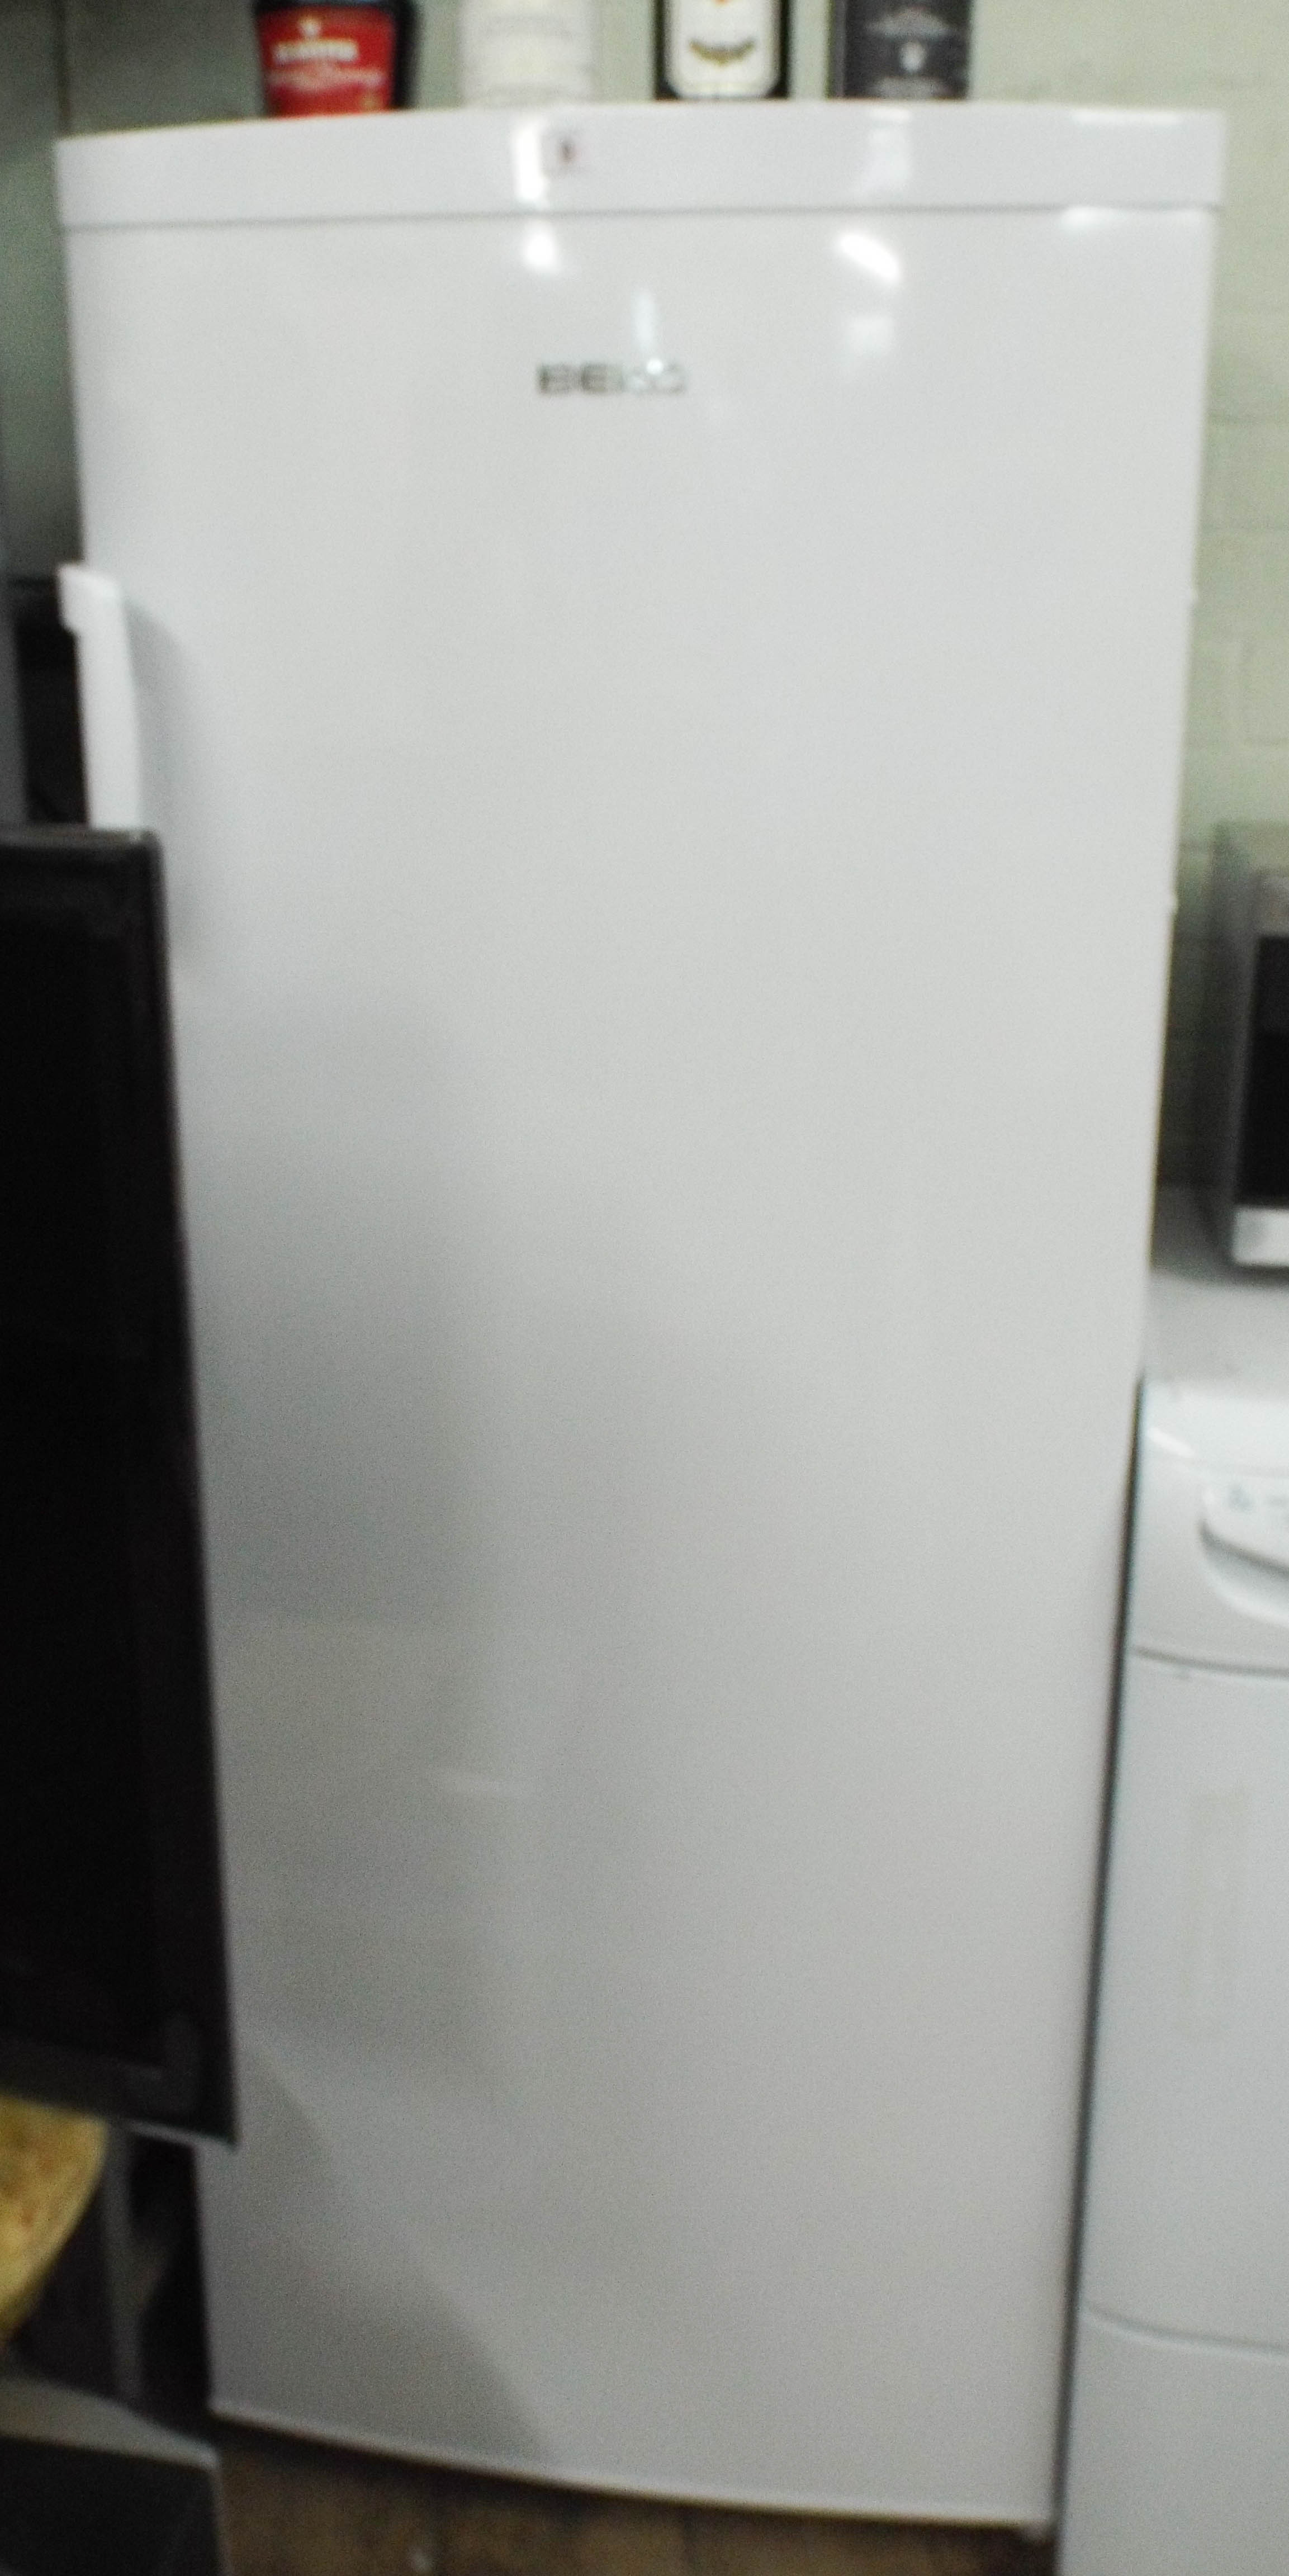 A tall Ecko fridge